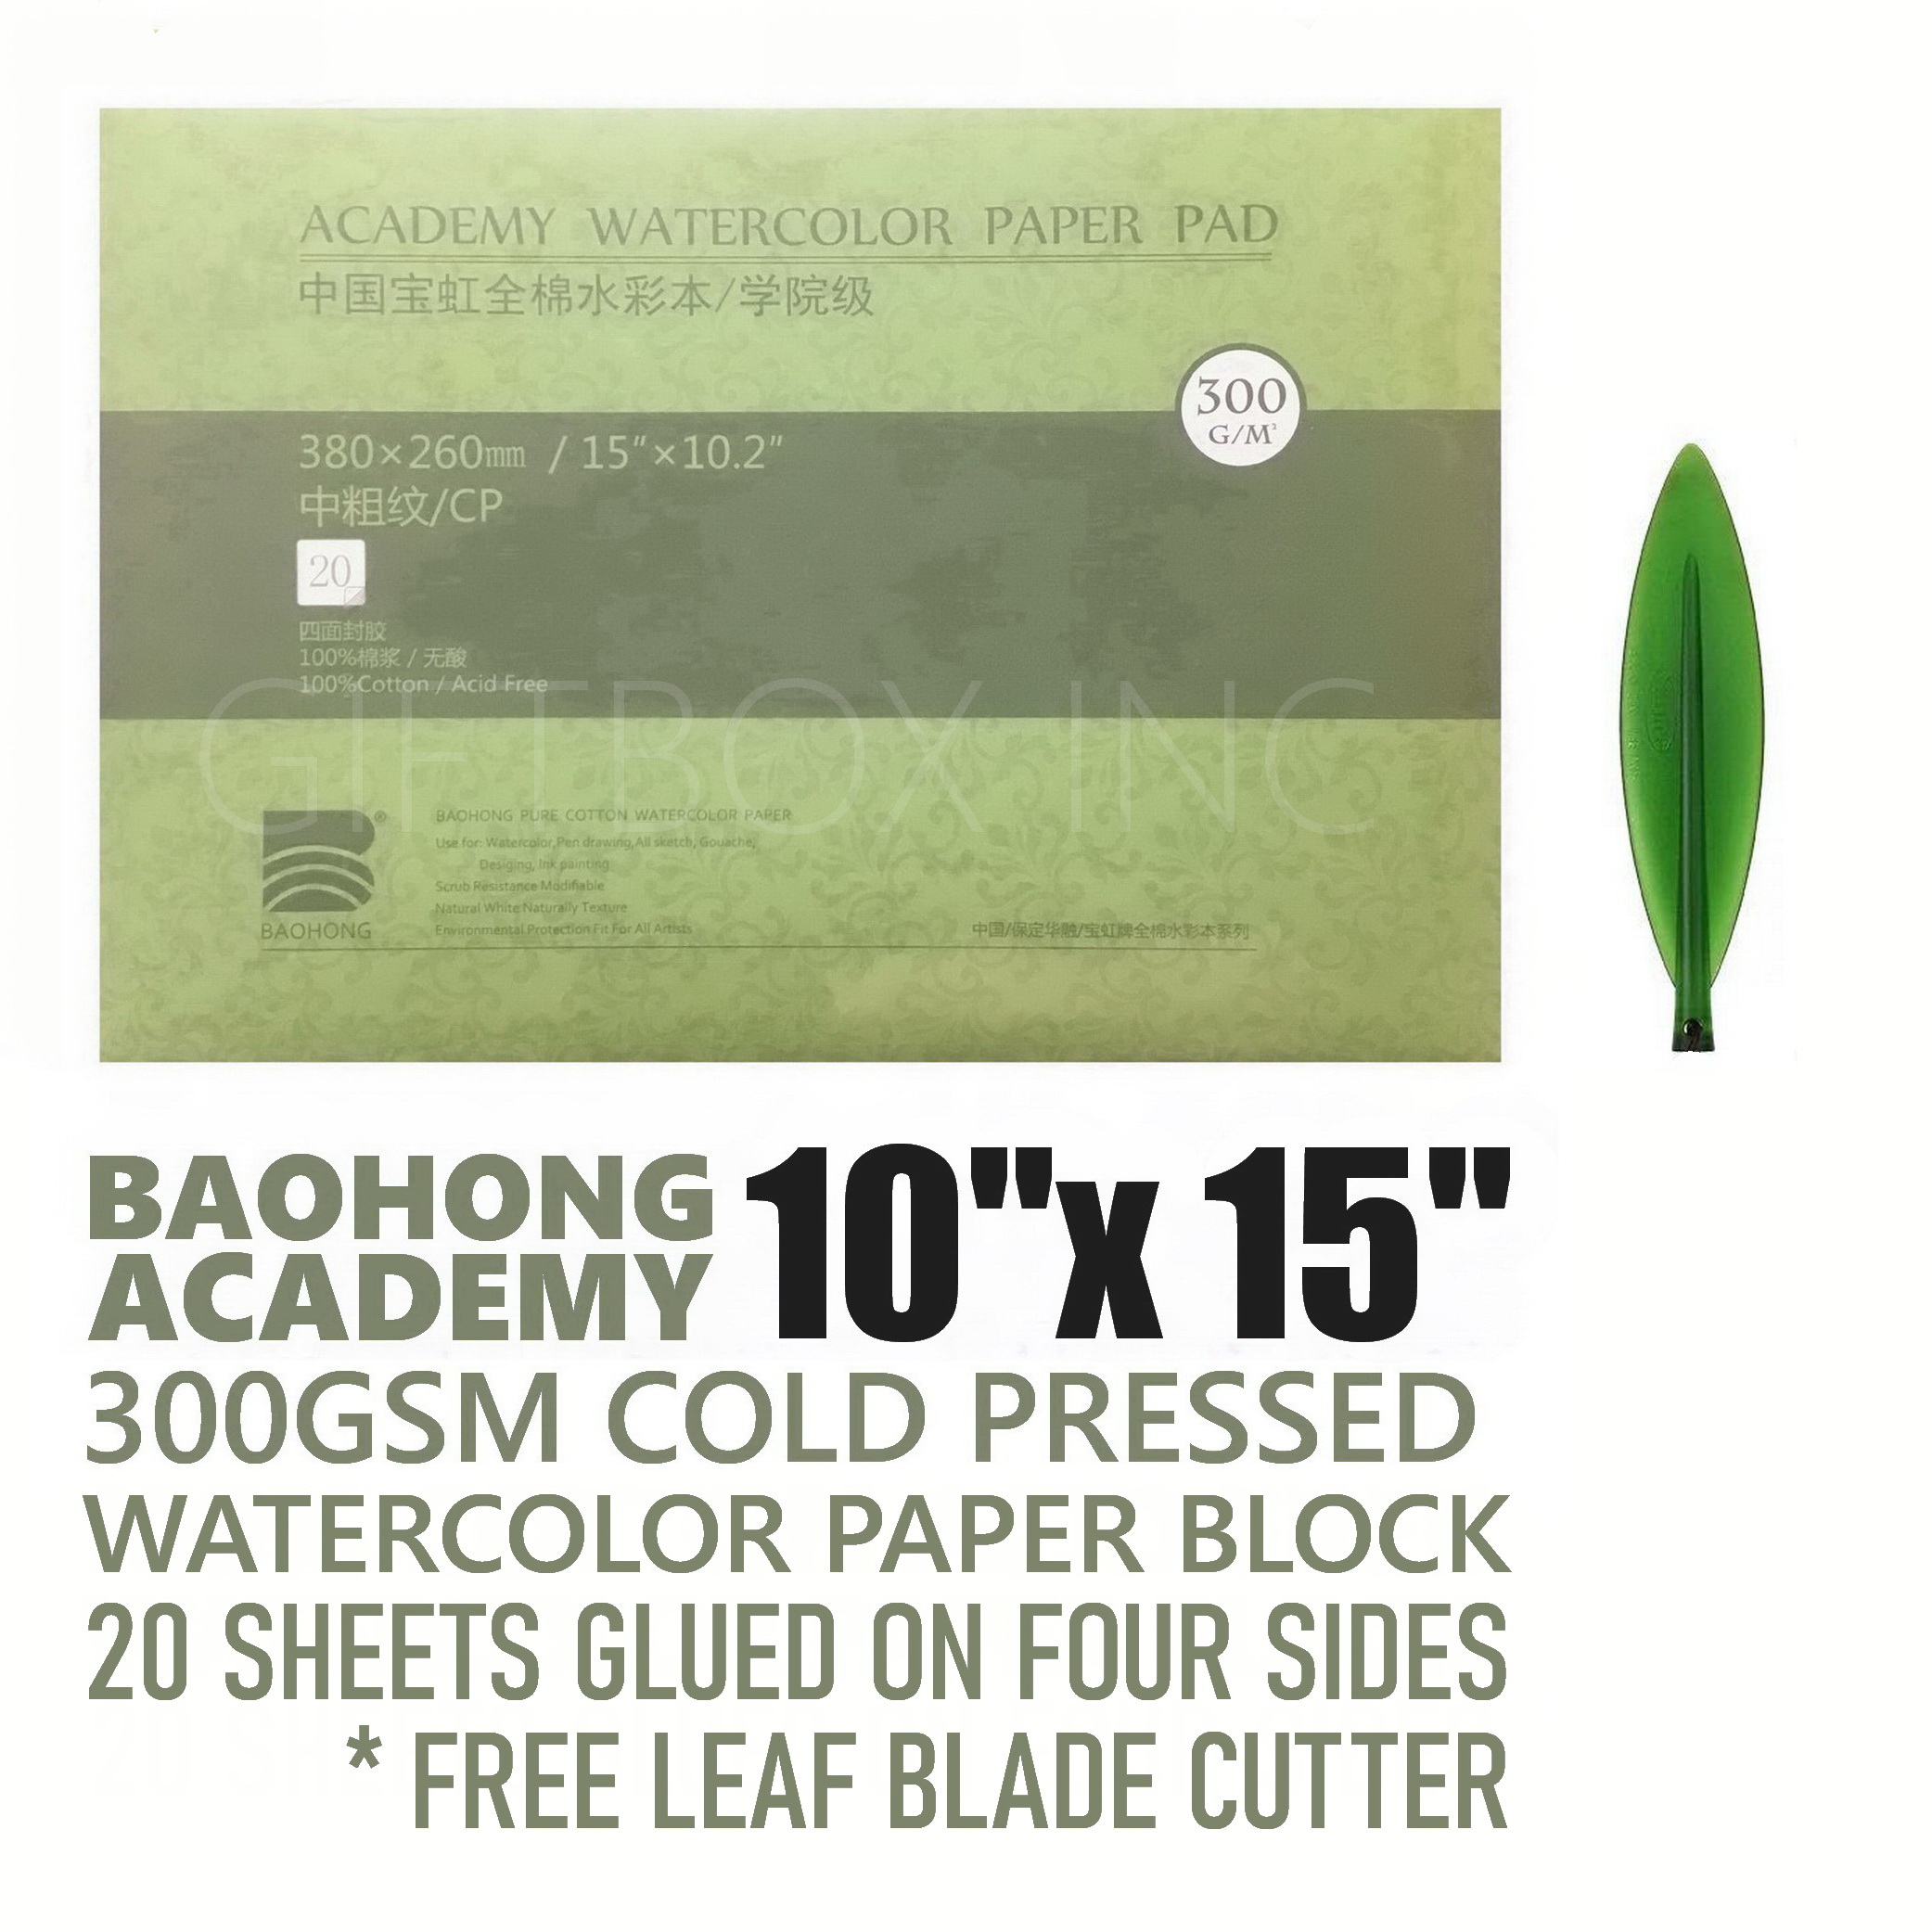 Baohong Pure Cotton Academy Watercolor Paper Pad